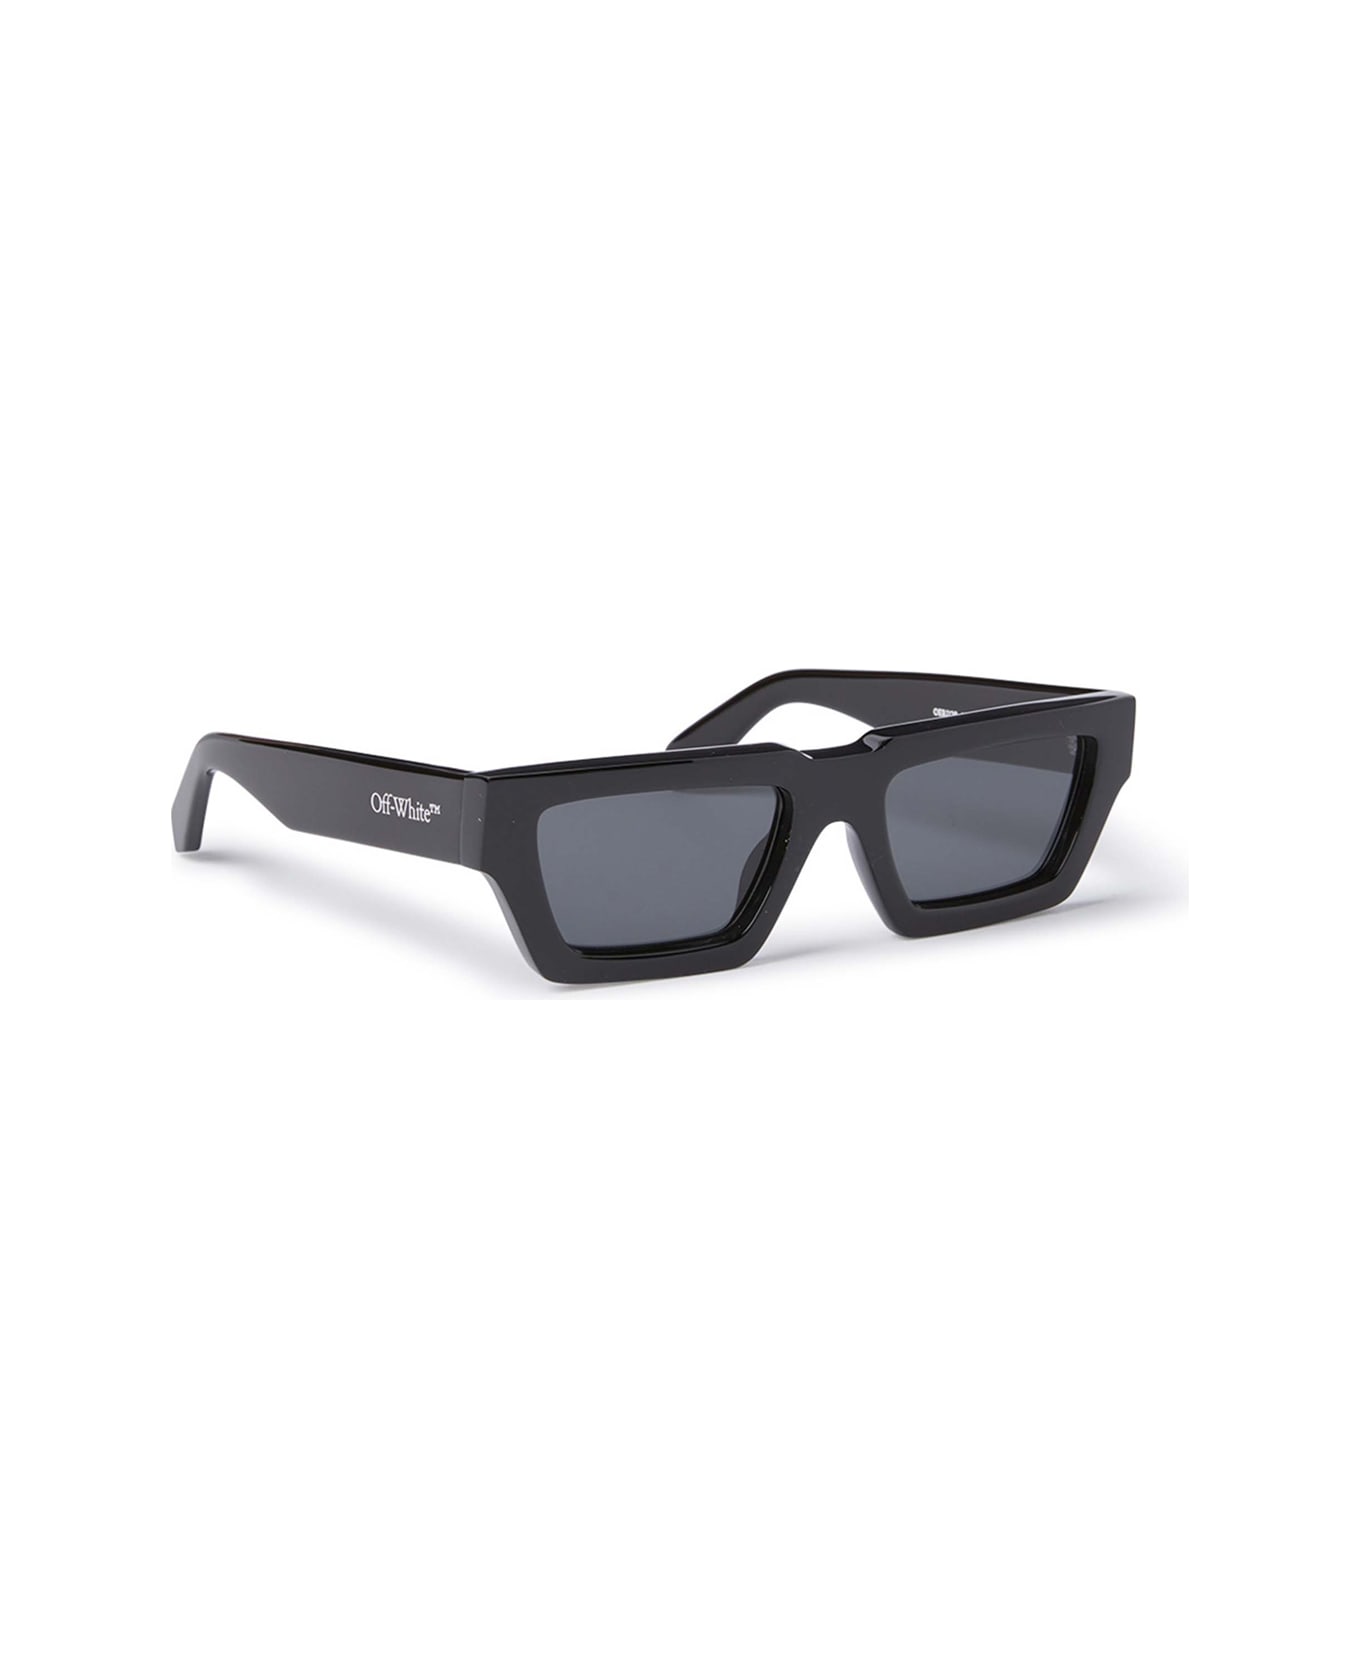 Off-White Oeri129 Manchester 1007 Black Sunglasses - Nero